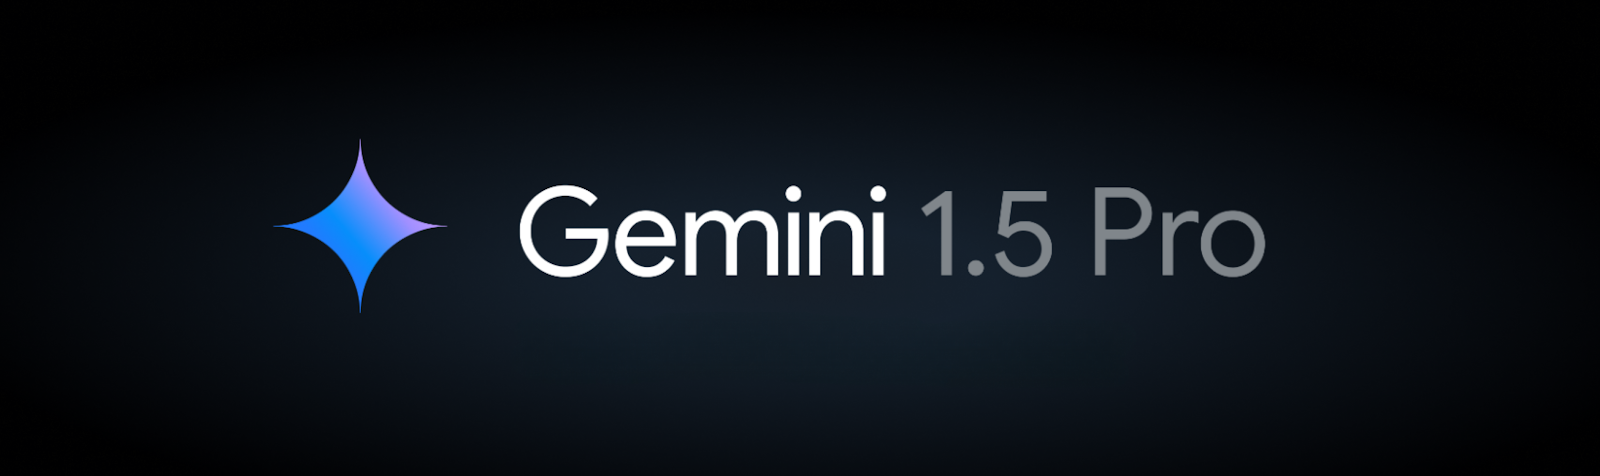 Google bringt Gemini 1.5 Pro auf den Markt